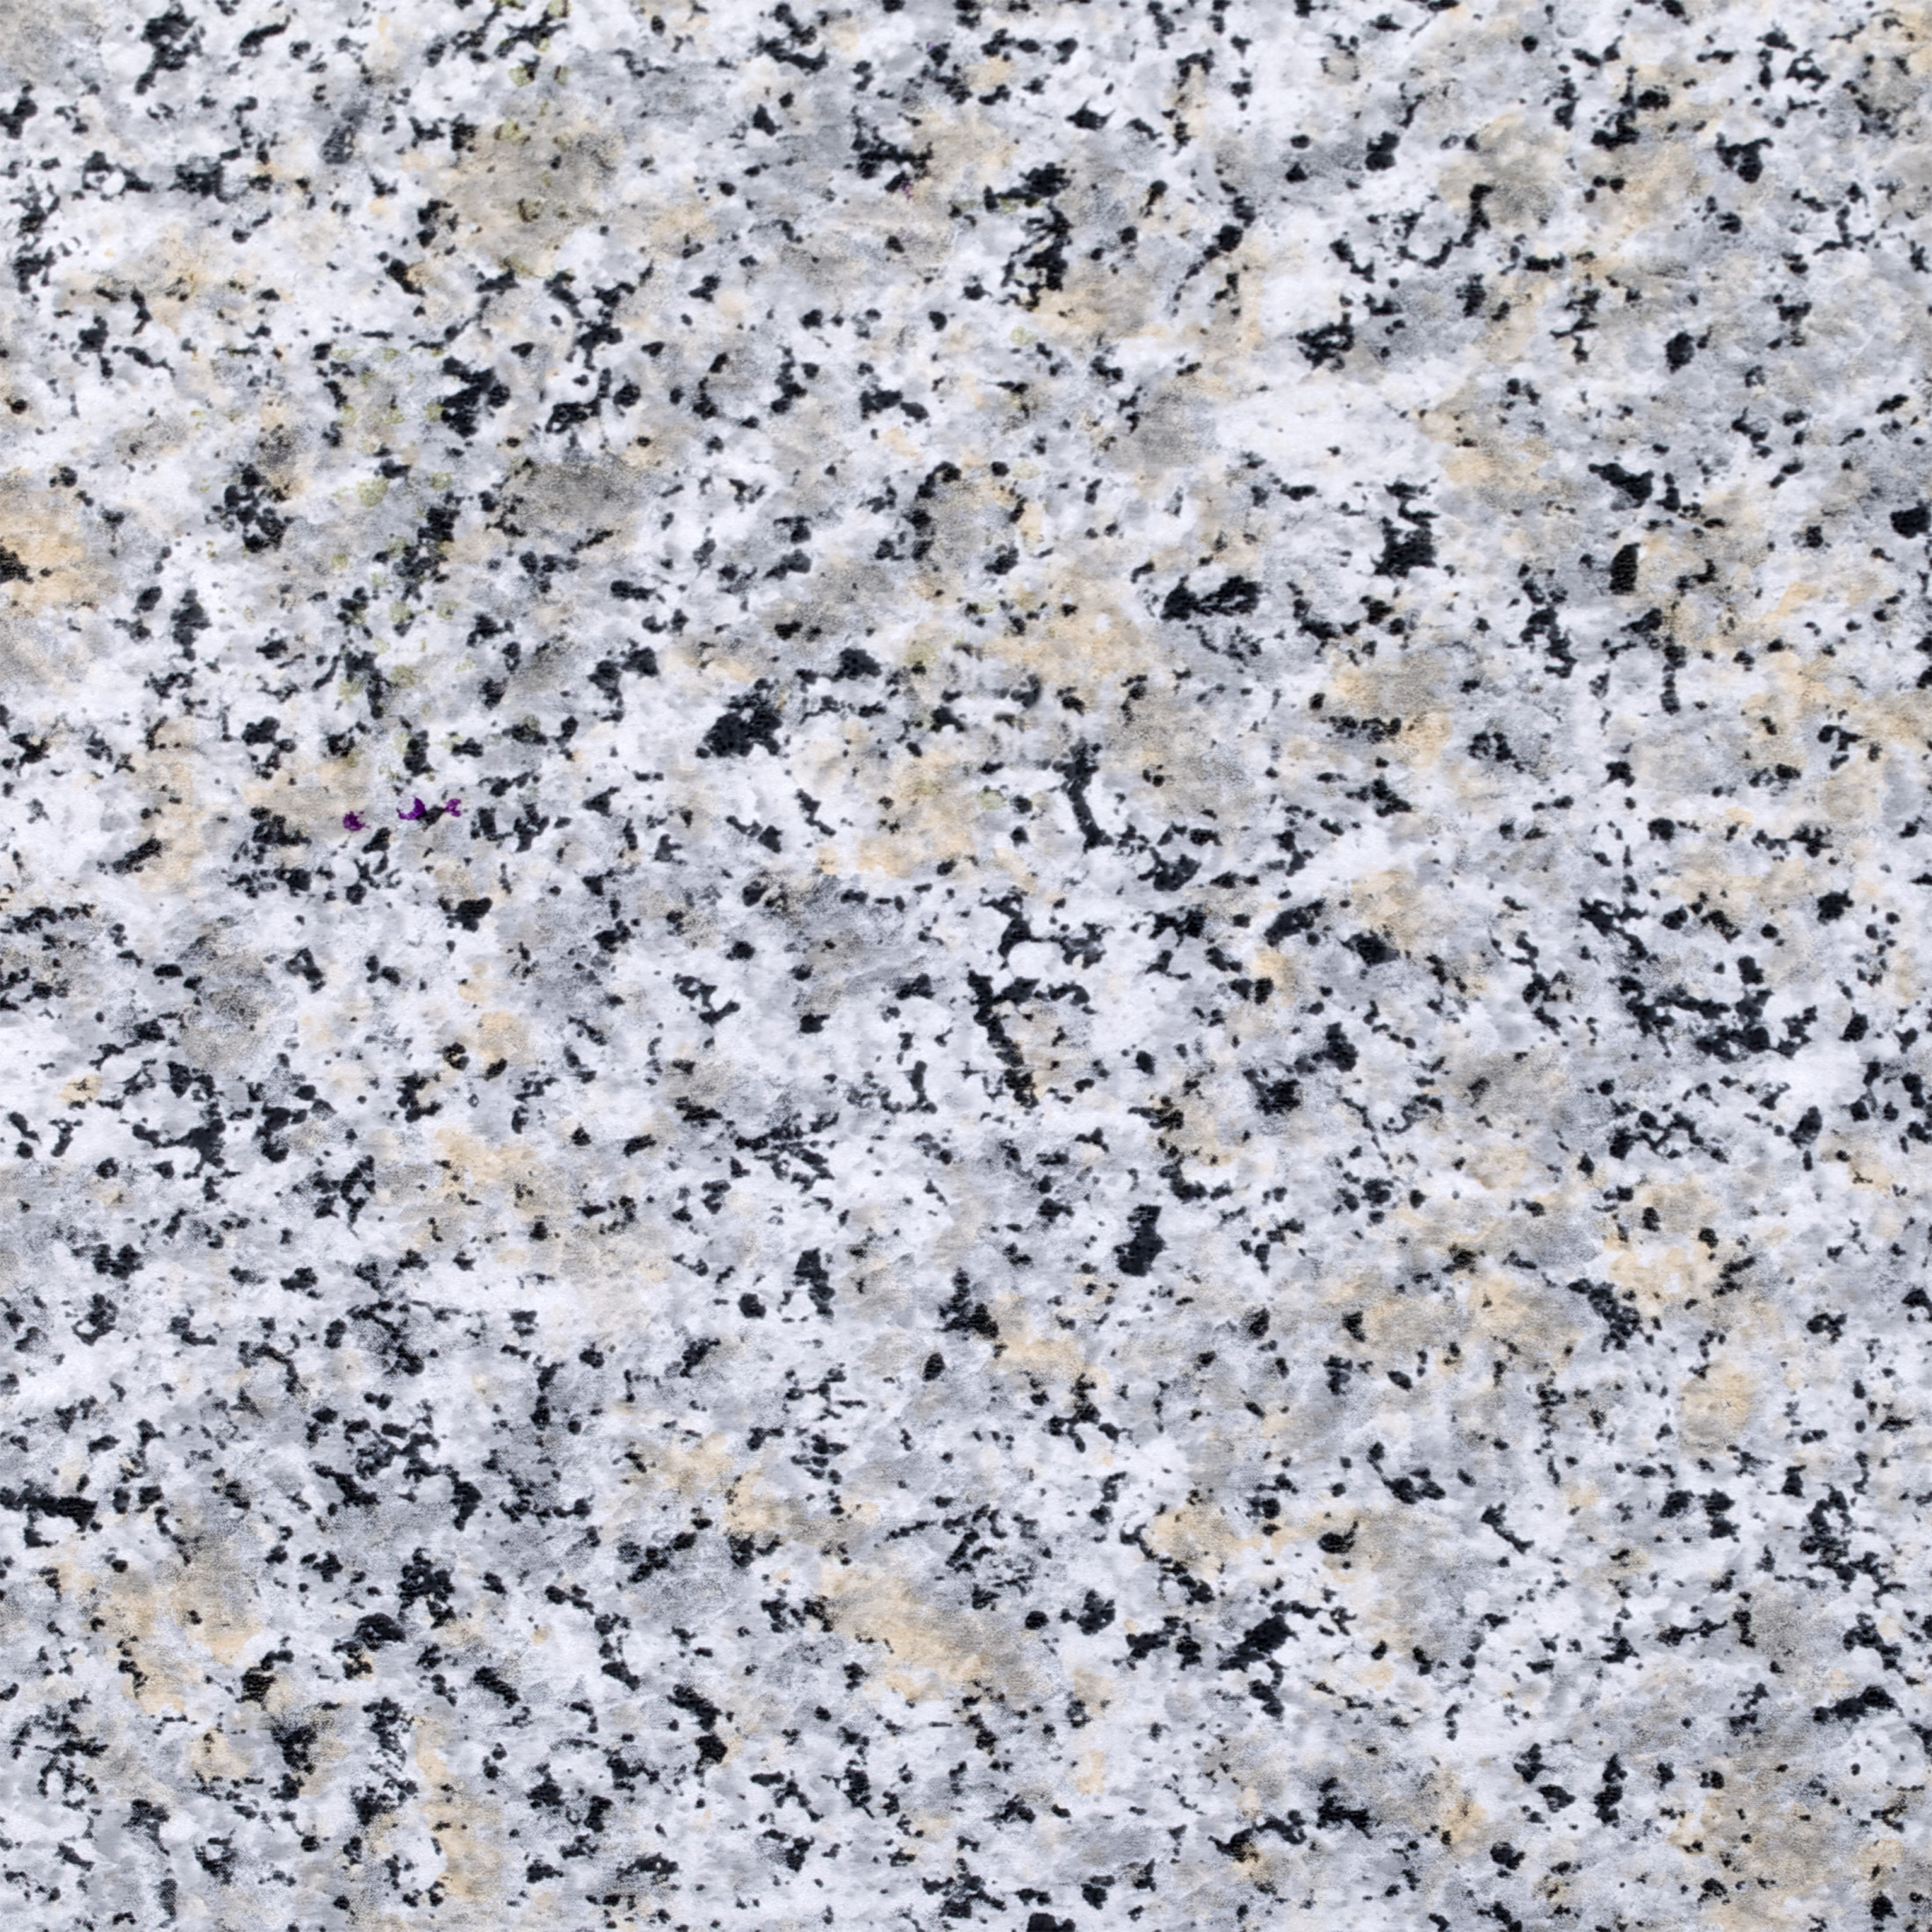 EasyLiner Smooth Top Shelf Liner, Gray Granite, 12 in. x 10 ft. Roll - image 5 of 11